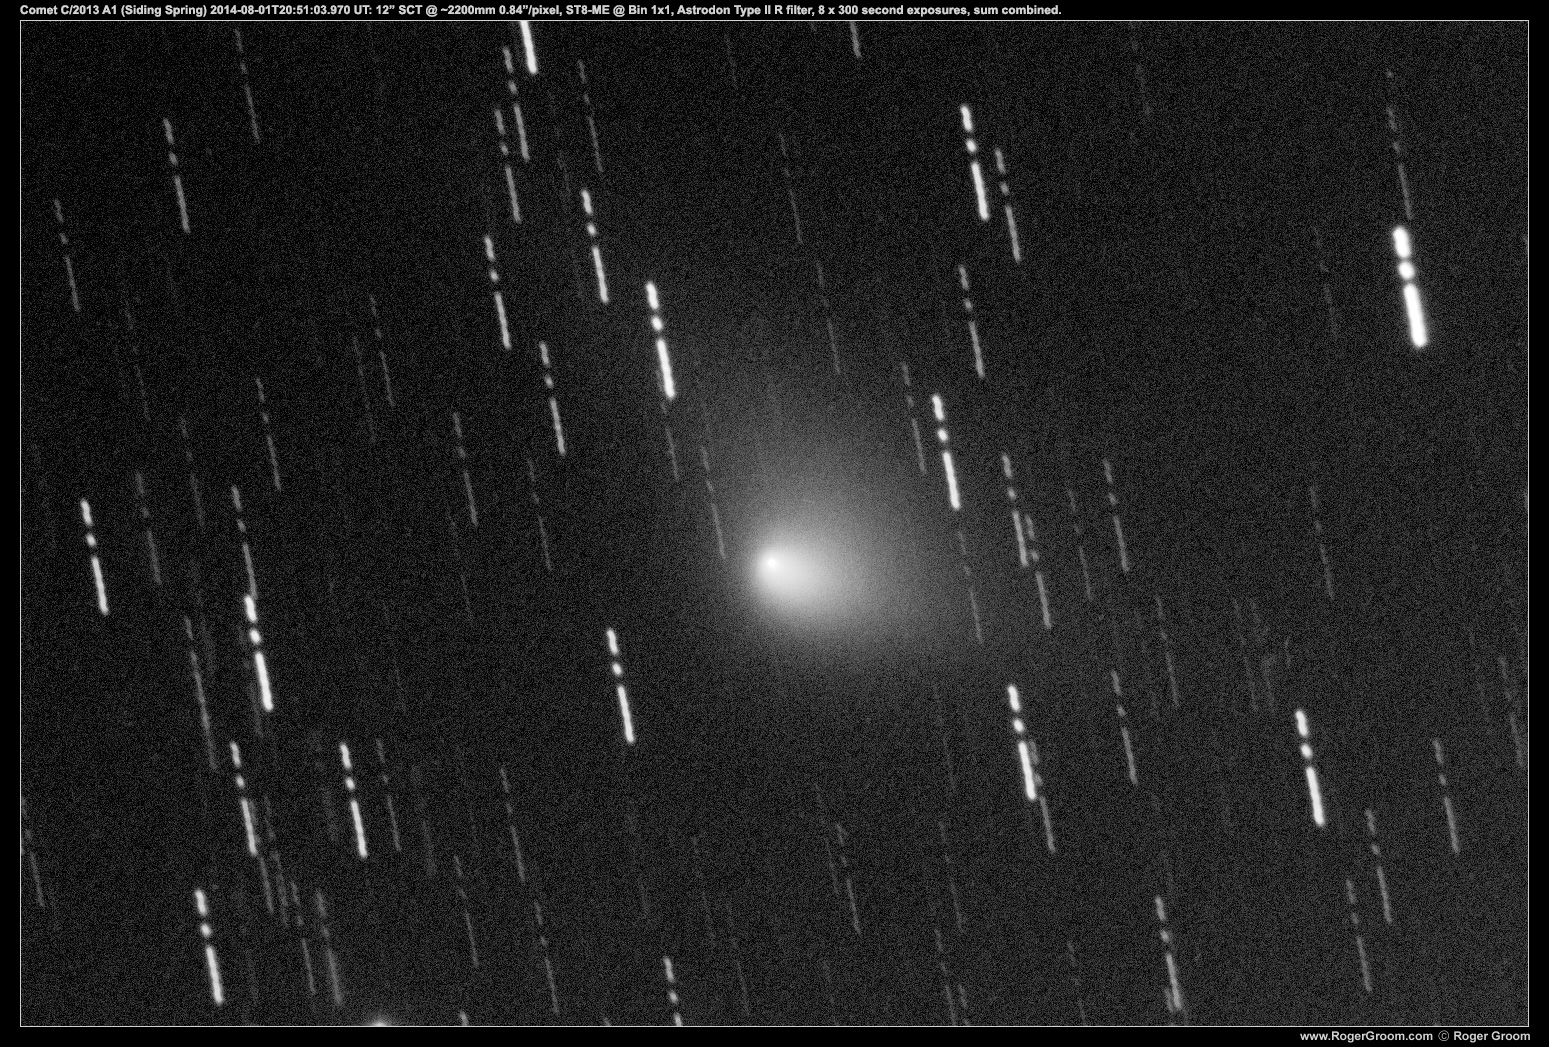 Comet C/2013 A1 (Siding Spring) 2014-08-01T20:51:03.970UTC Start; 12” SCT @ 2200mm, 0.84”/pixel; ST8-XME @ bin1x1, -25c, 8x300 second exposures summed.